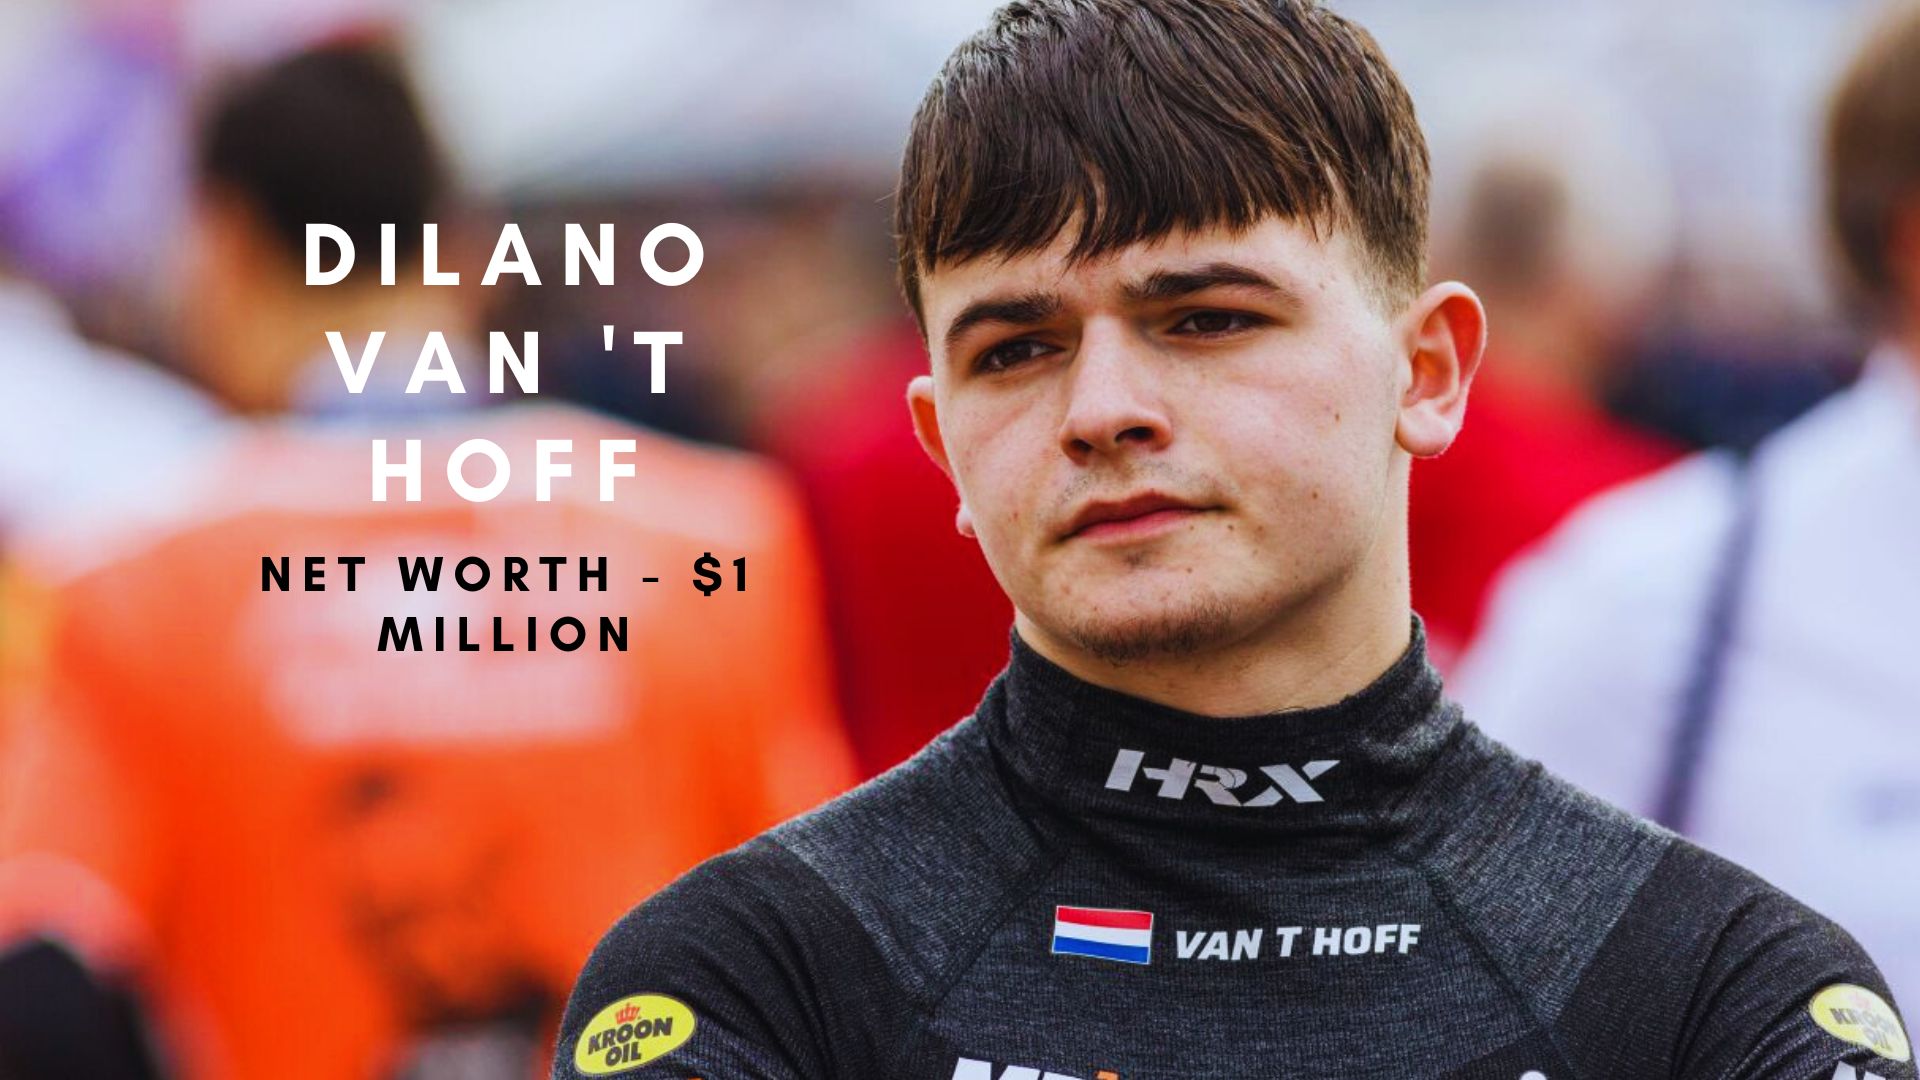 Dilano Van 't Hoff net worth